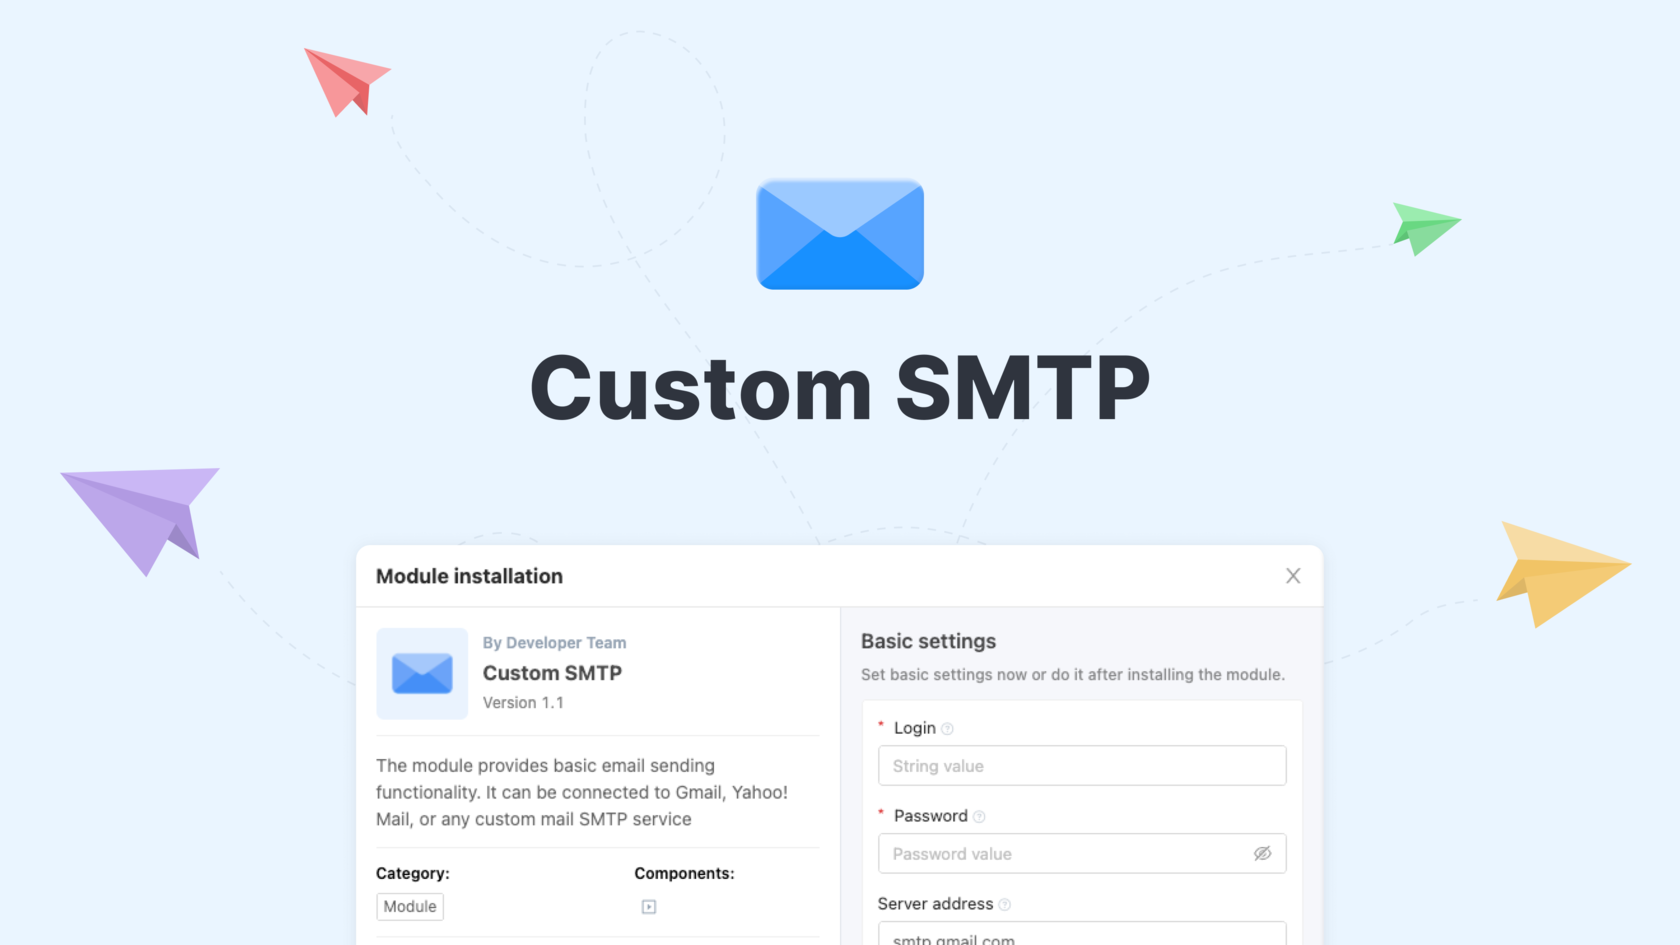 What is custom SMTP?